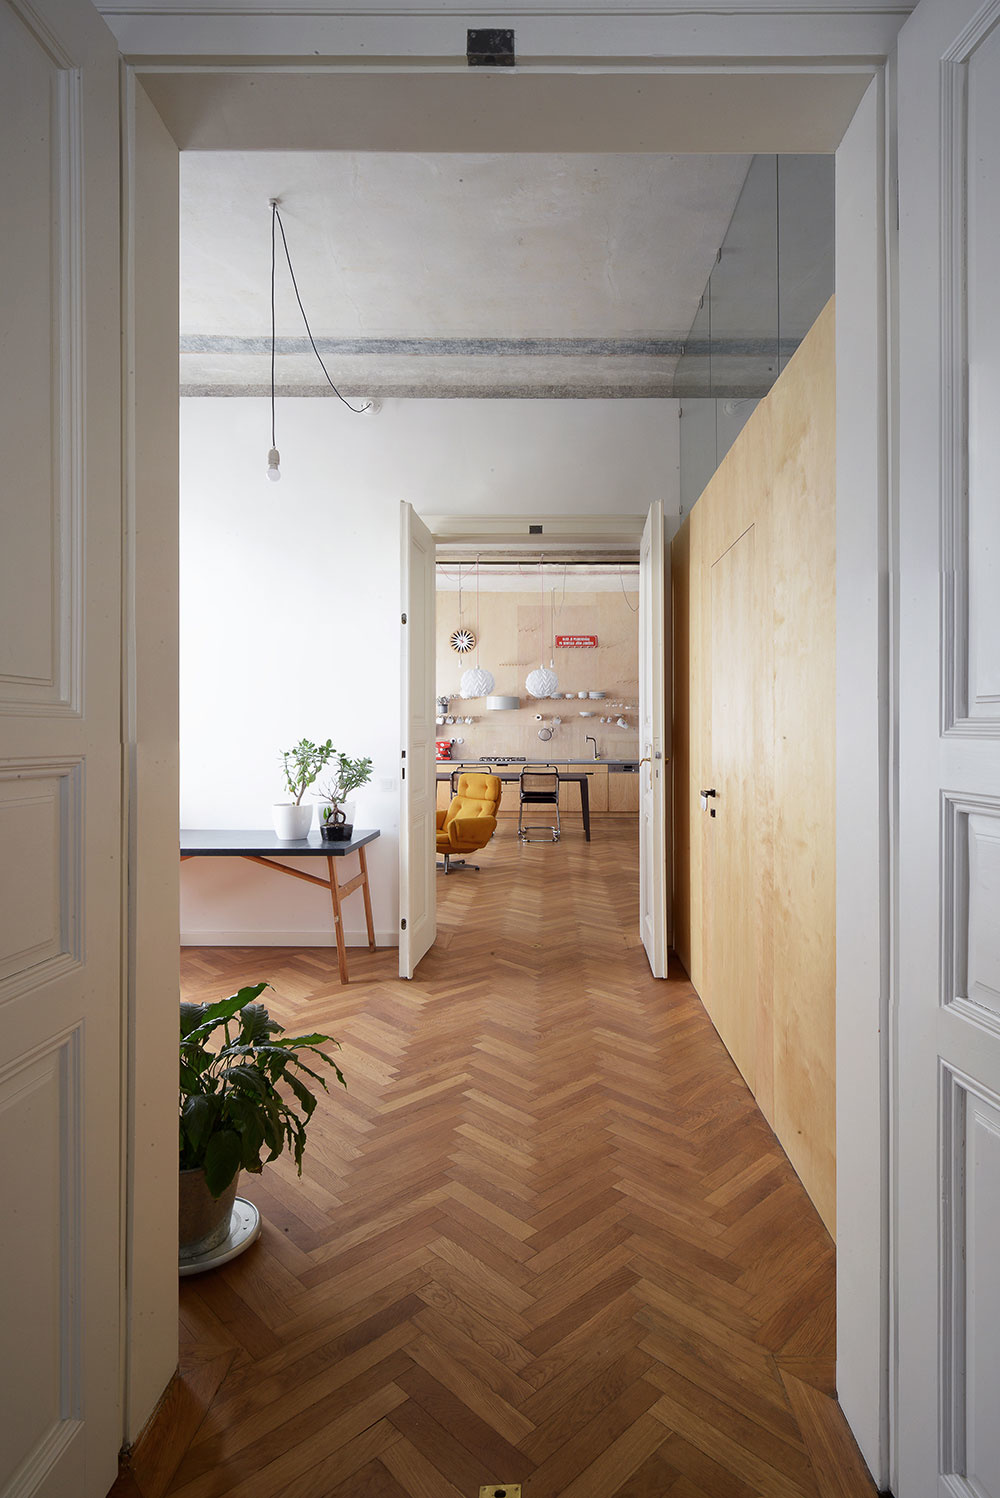 Premena historického bytu v Znojme: Rekonštrukcia odhalila obrovský potenciál!